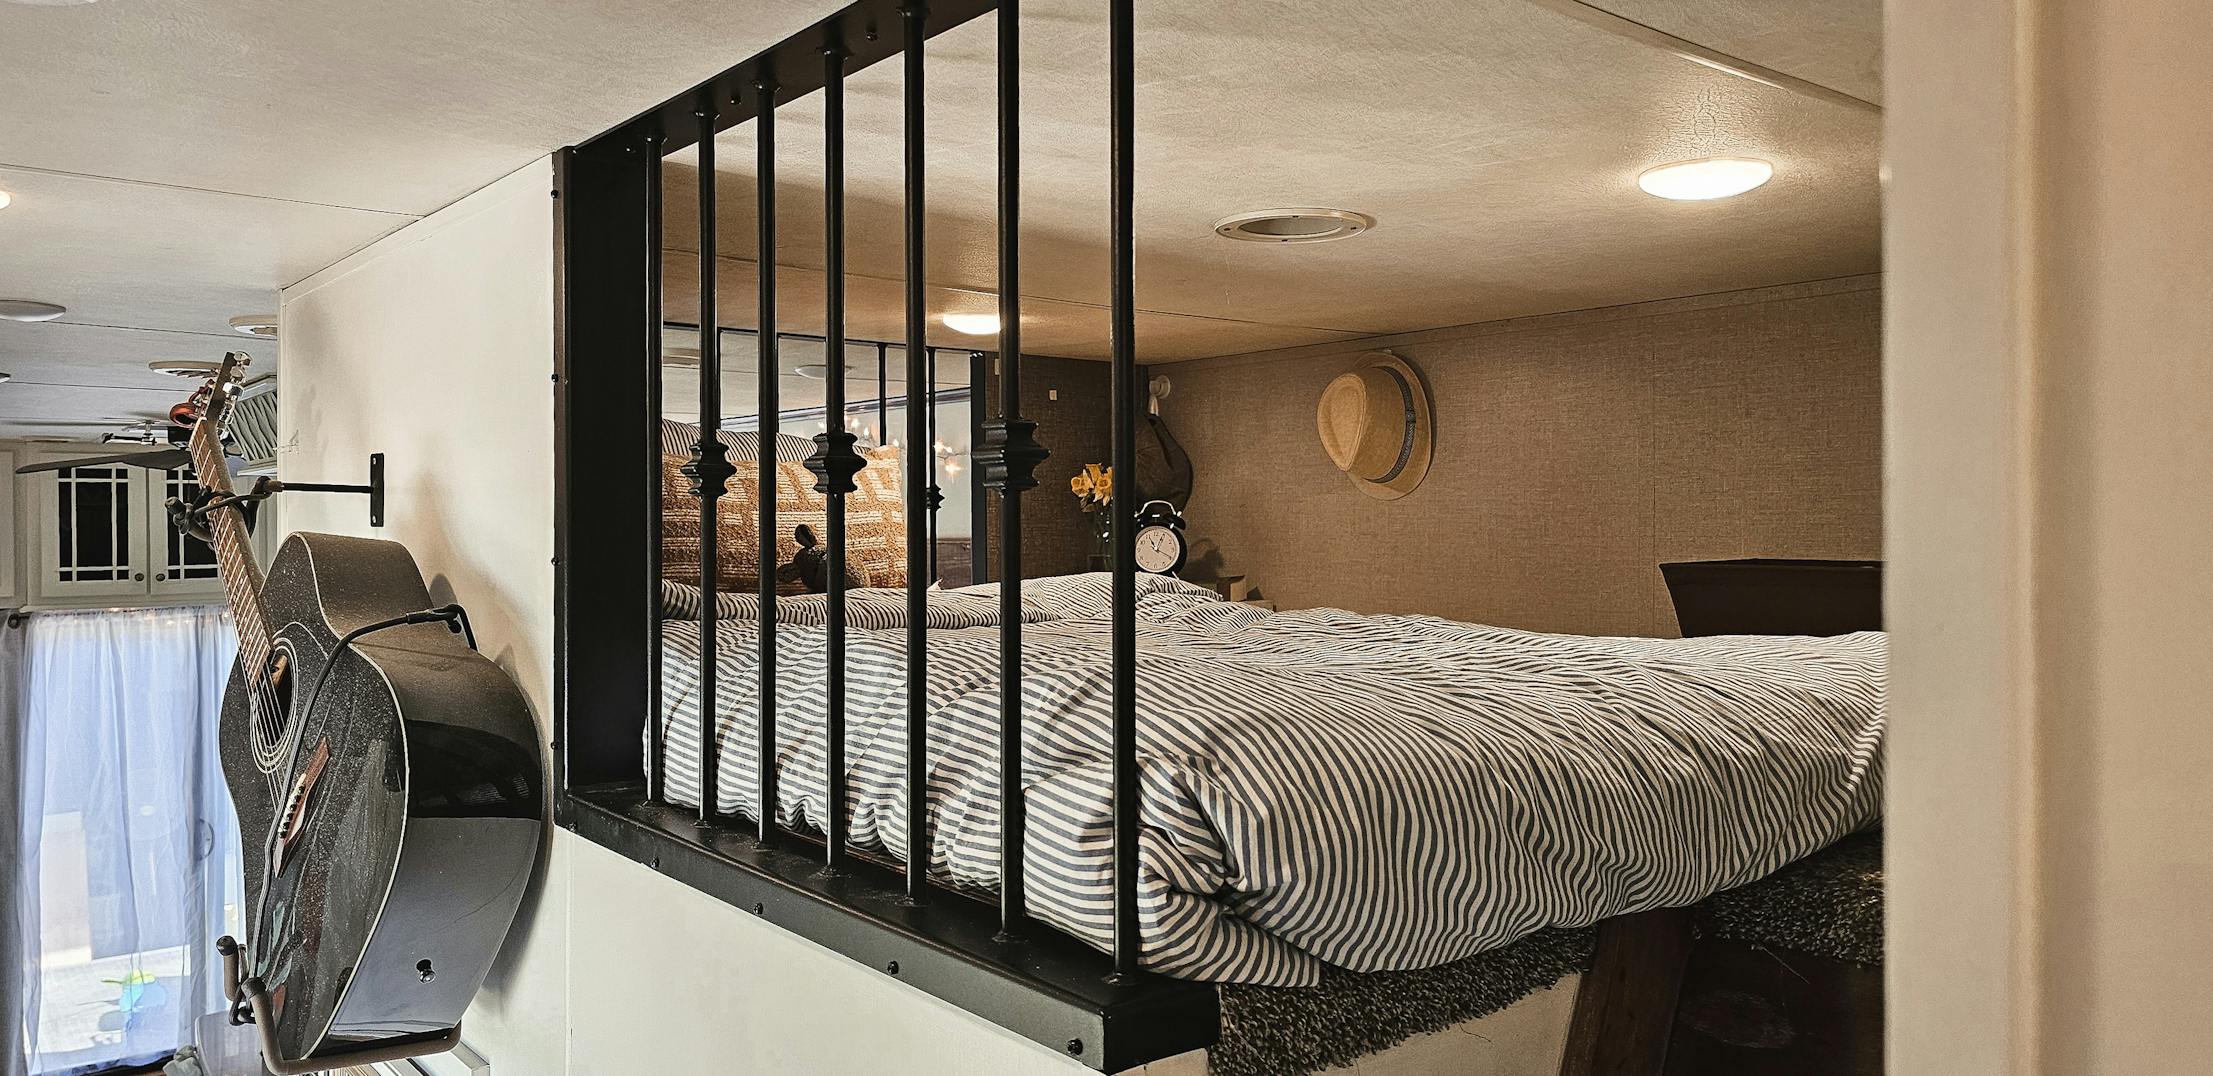 The lofted bedroom inside Bibi and JC Barringer's KZ Durango Gold fifth wheel.